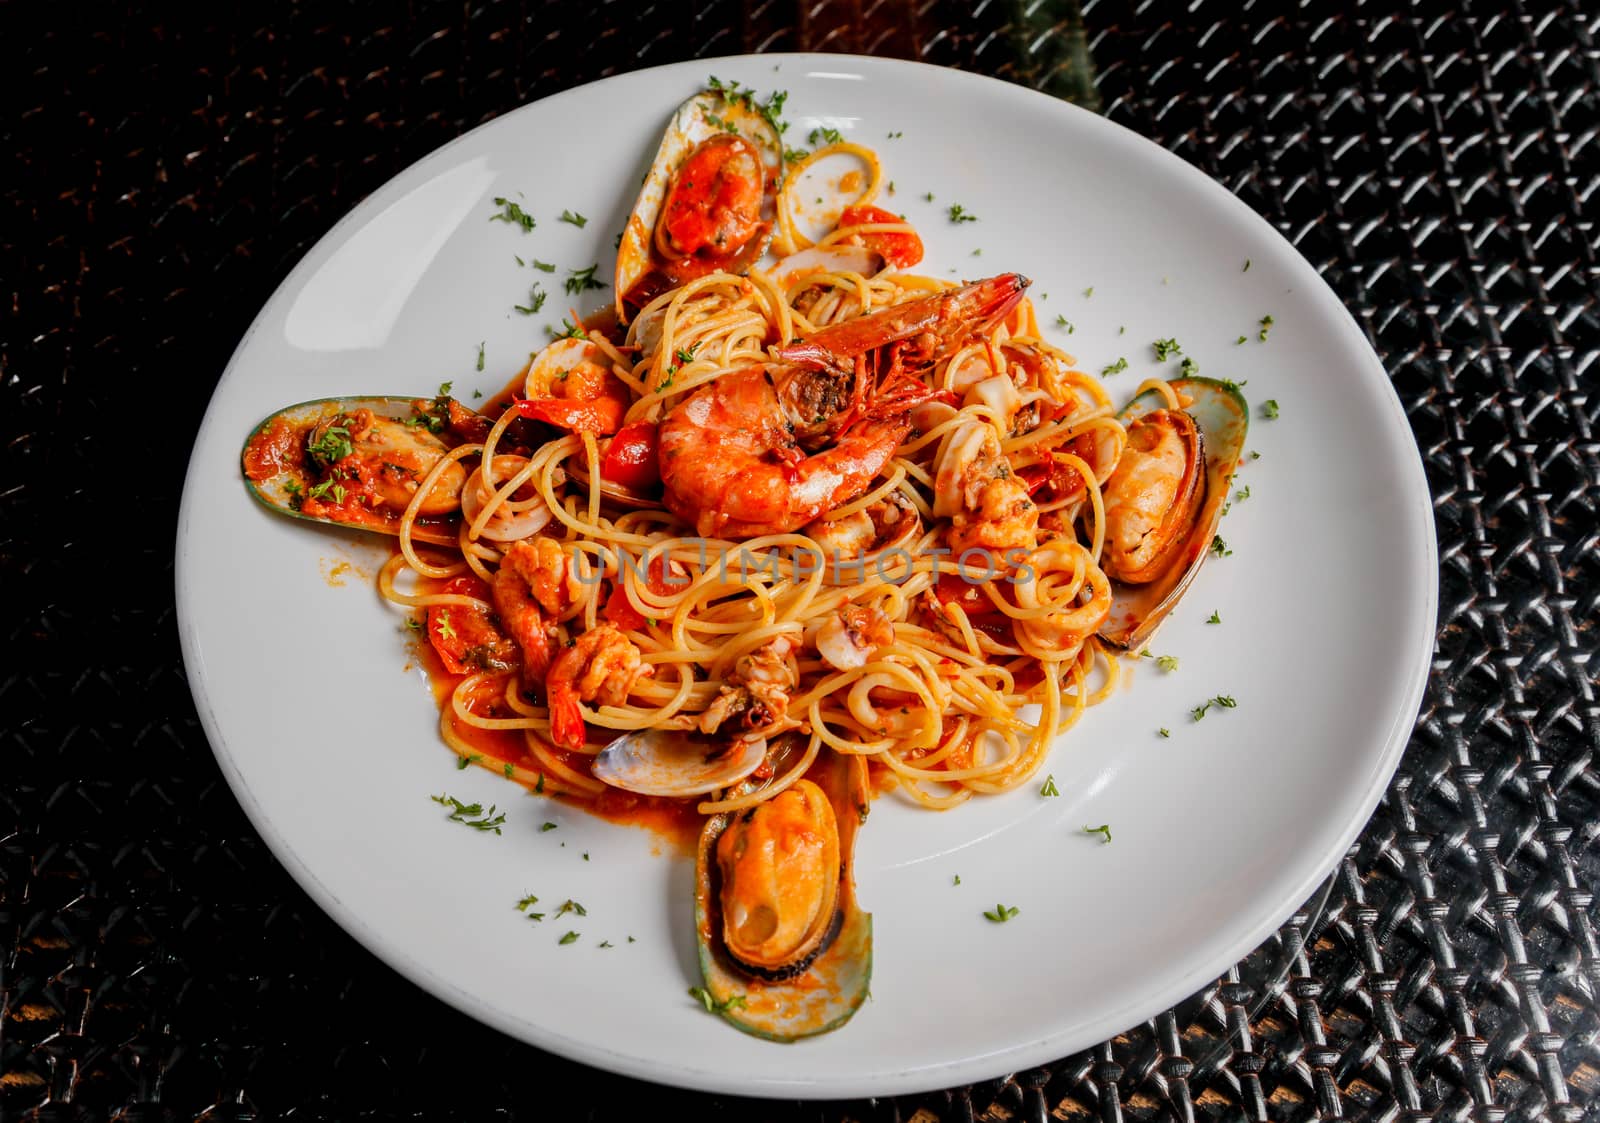 Italian cuisine spaghetti and seafood. by kerdkanno